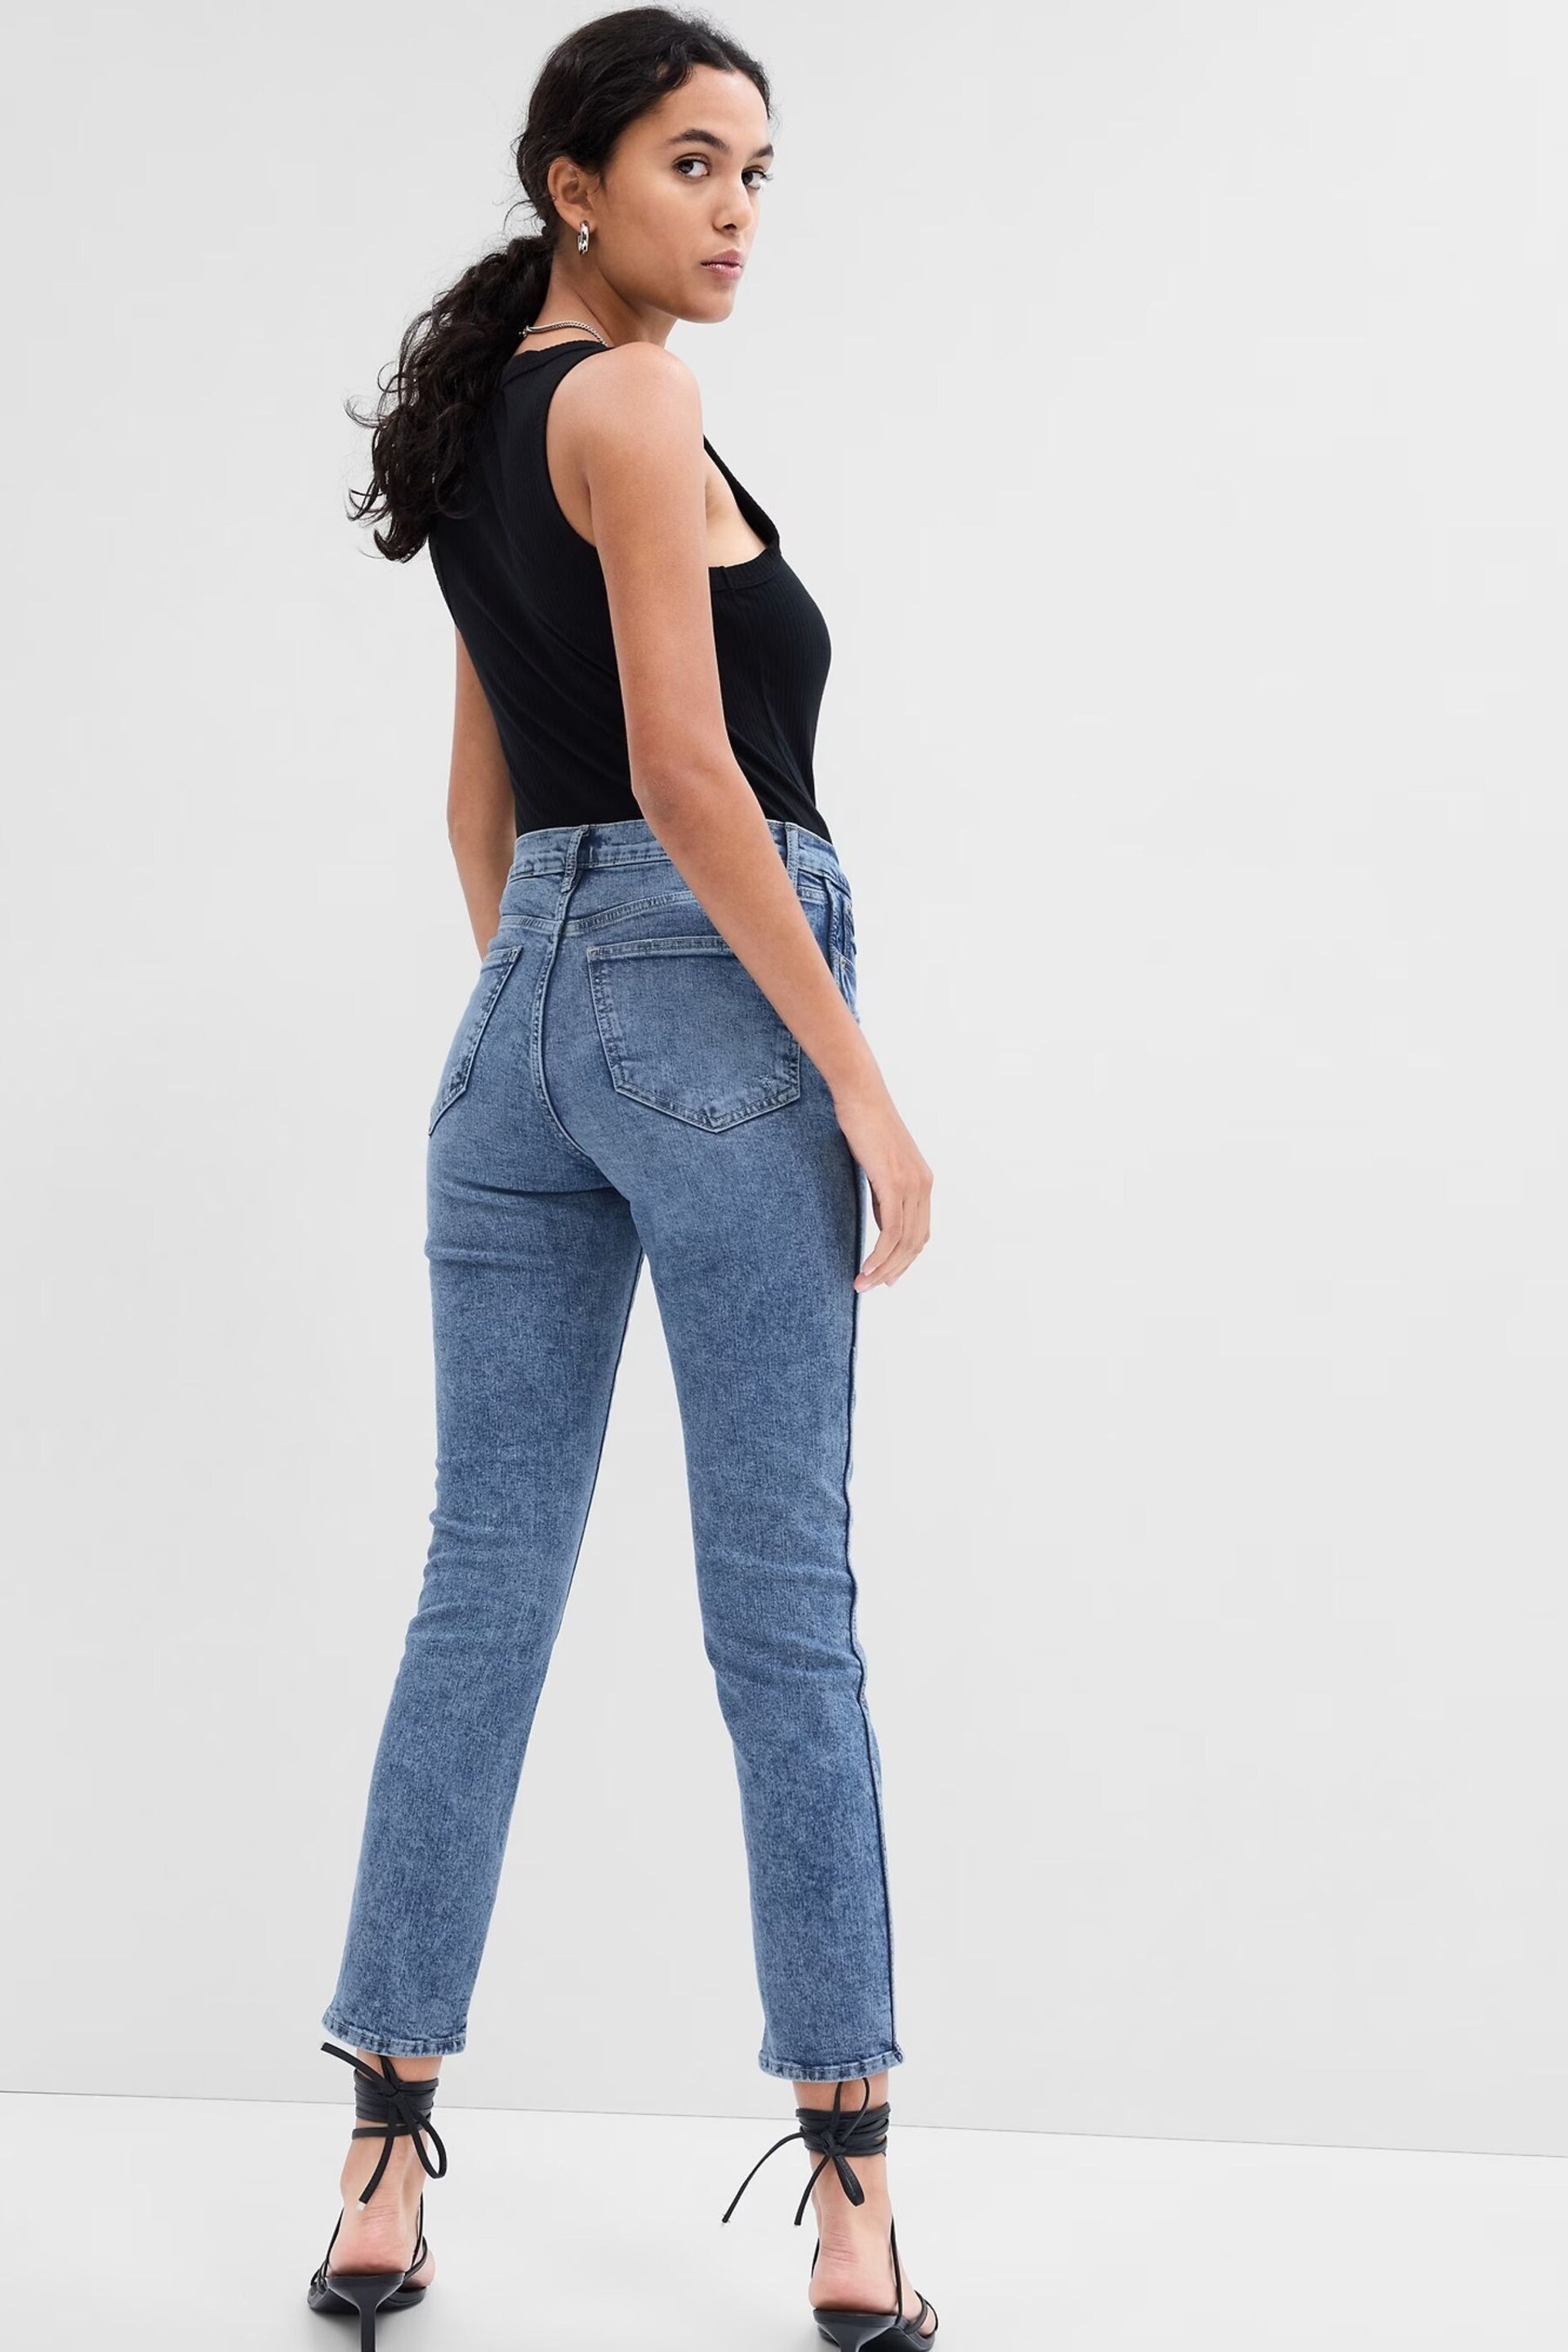 Gap Mid Wash Blue Vintage Slim High Waisted Jeans - Image 4 of 8